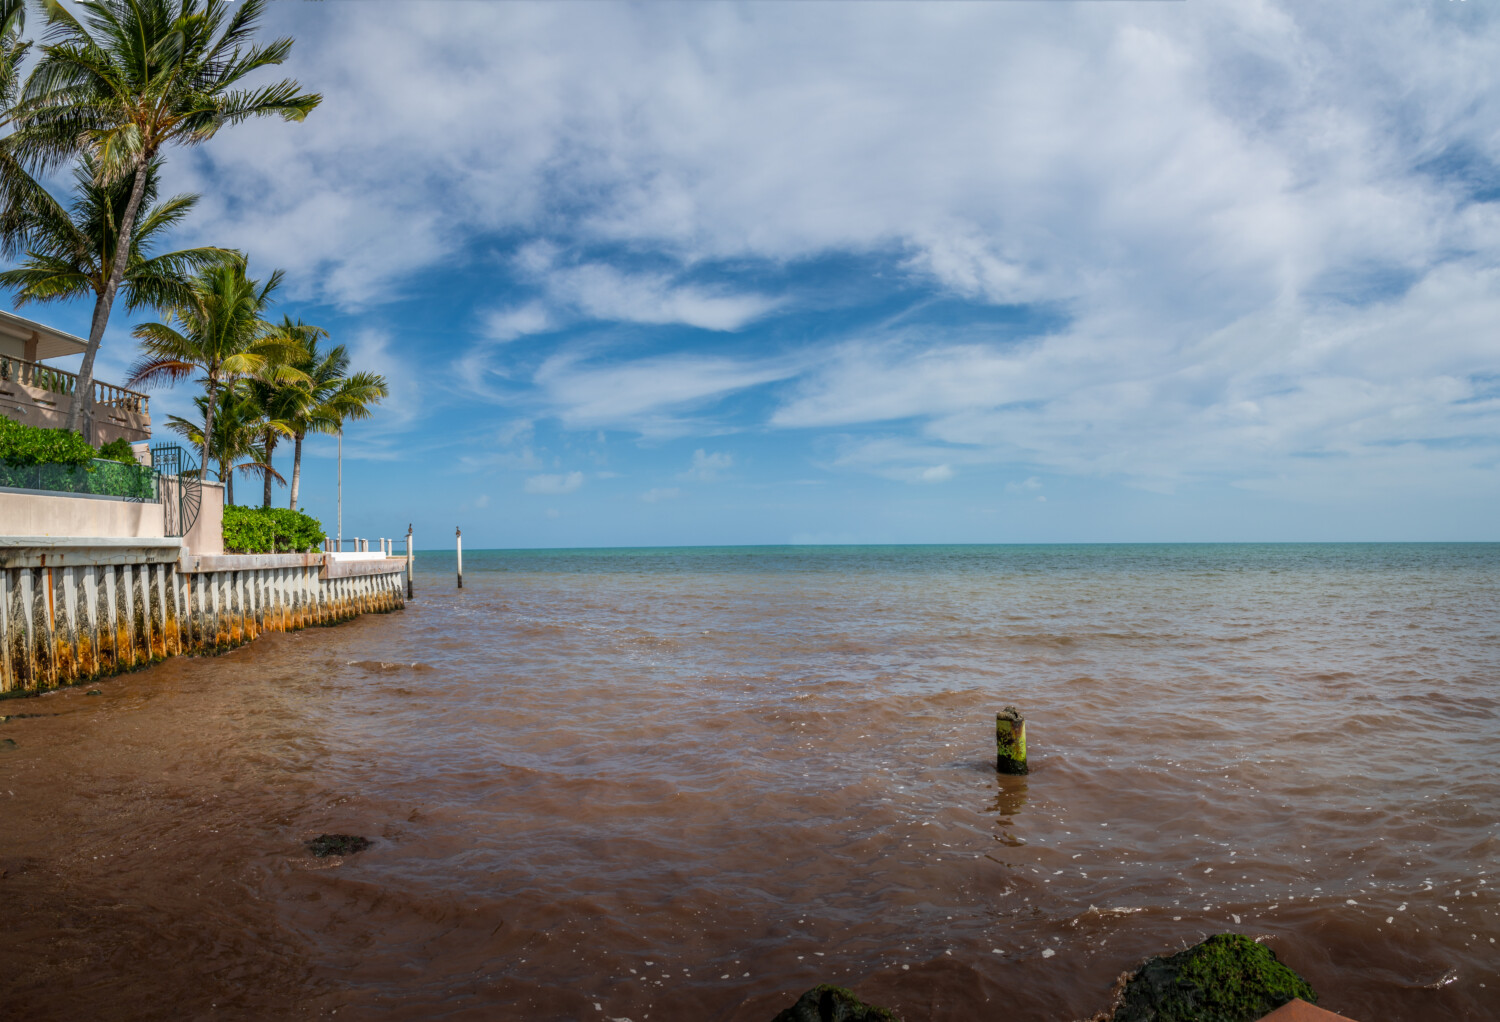 Red tide in summer season. Harmful algal bloom phenomenon in Key